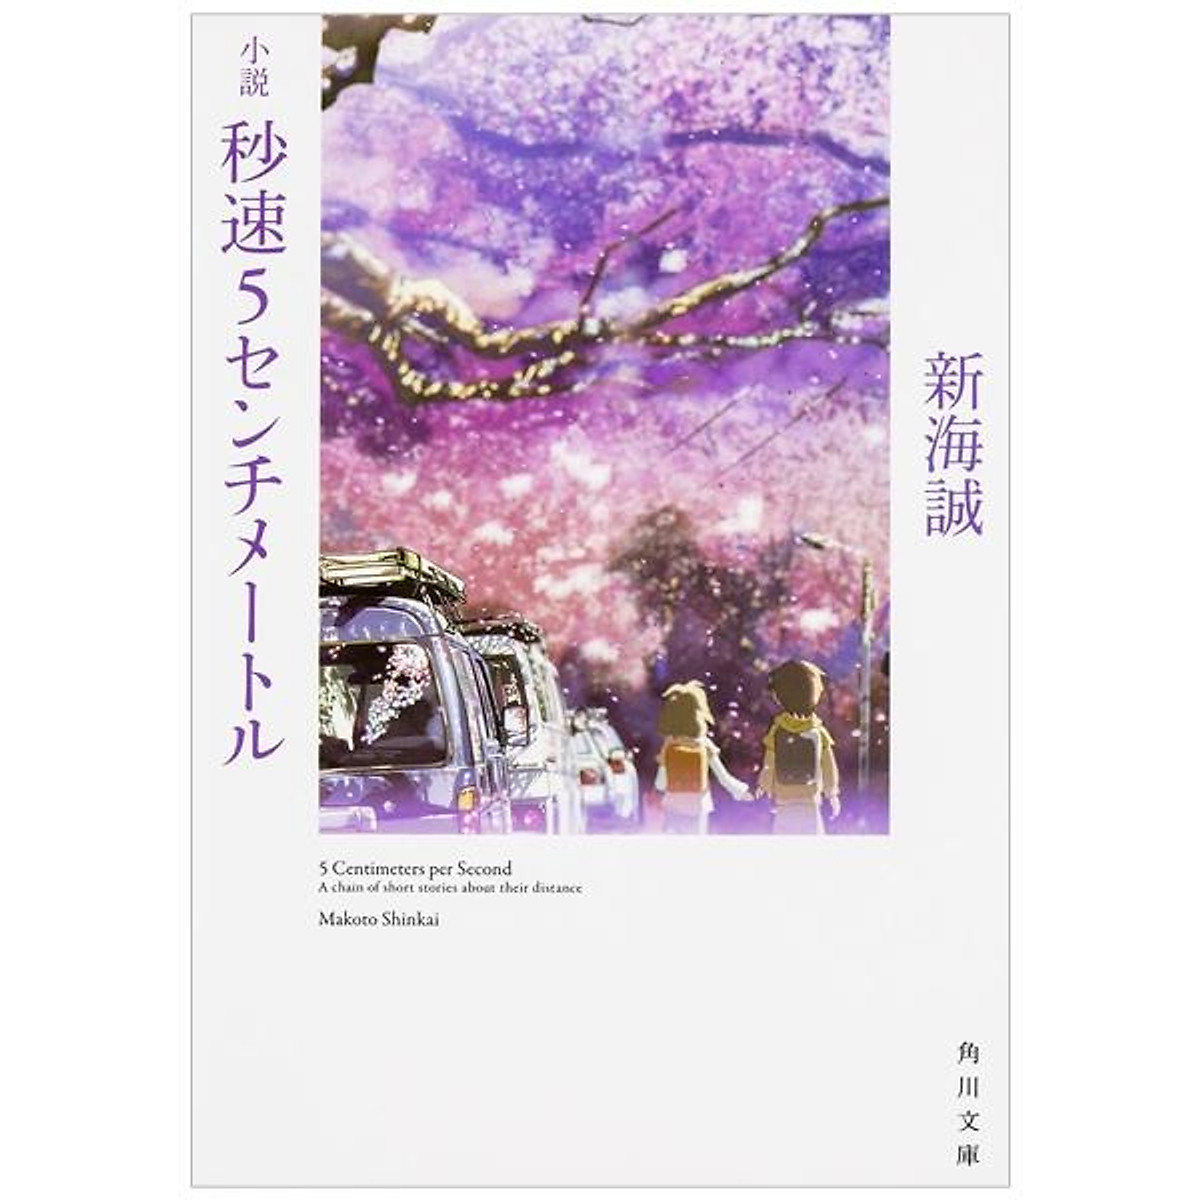 Makoto Shinkai - 5 CENTIMETERS PER SECOND | On Blu-ray & Digital - YouTube